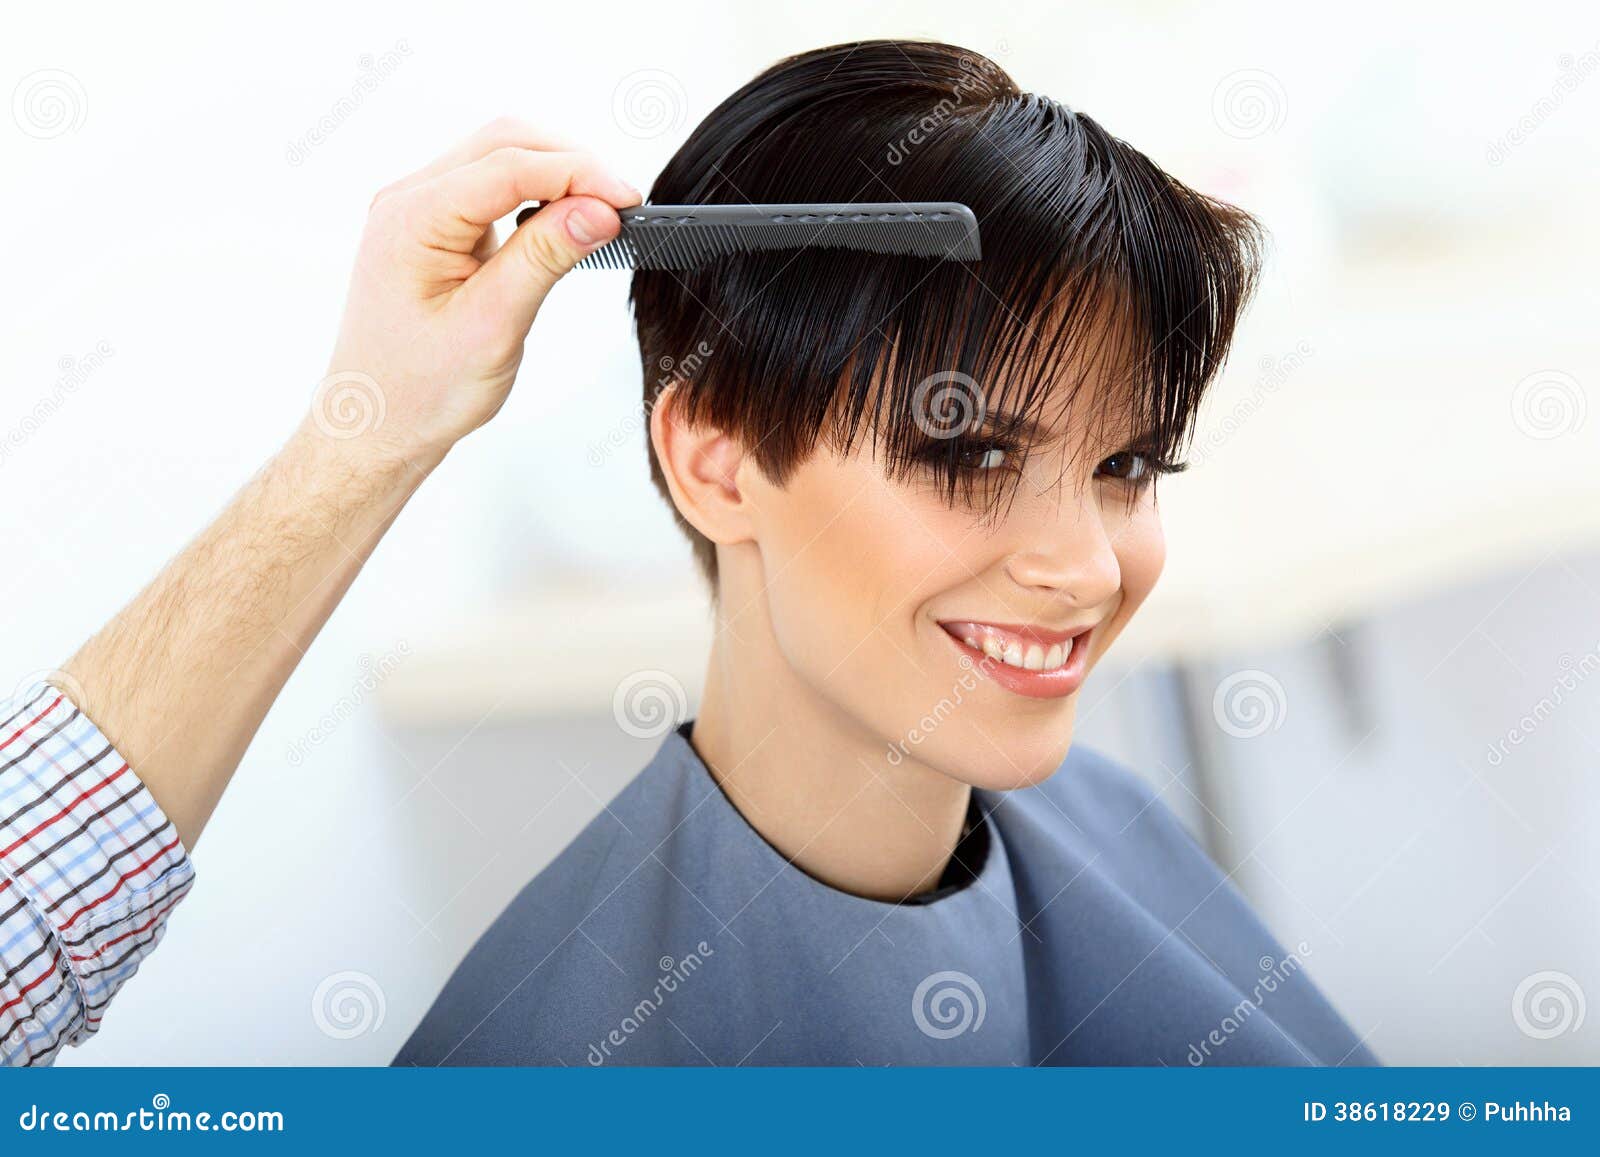 9,649 Hair Salon Short Hair Stock Photos - Free & Royalty-Free Stock Photos  from Dreamstime